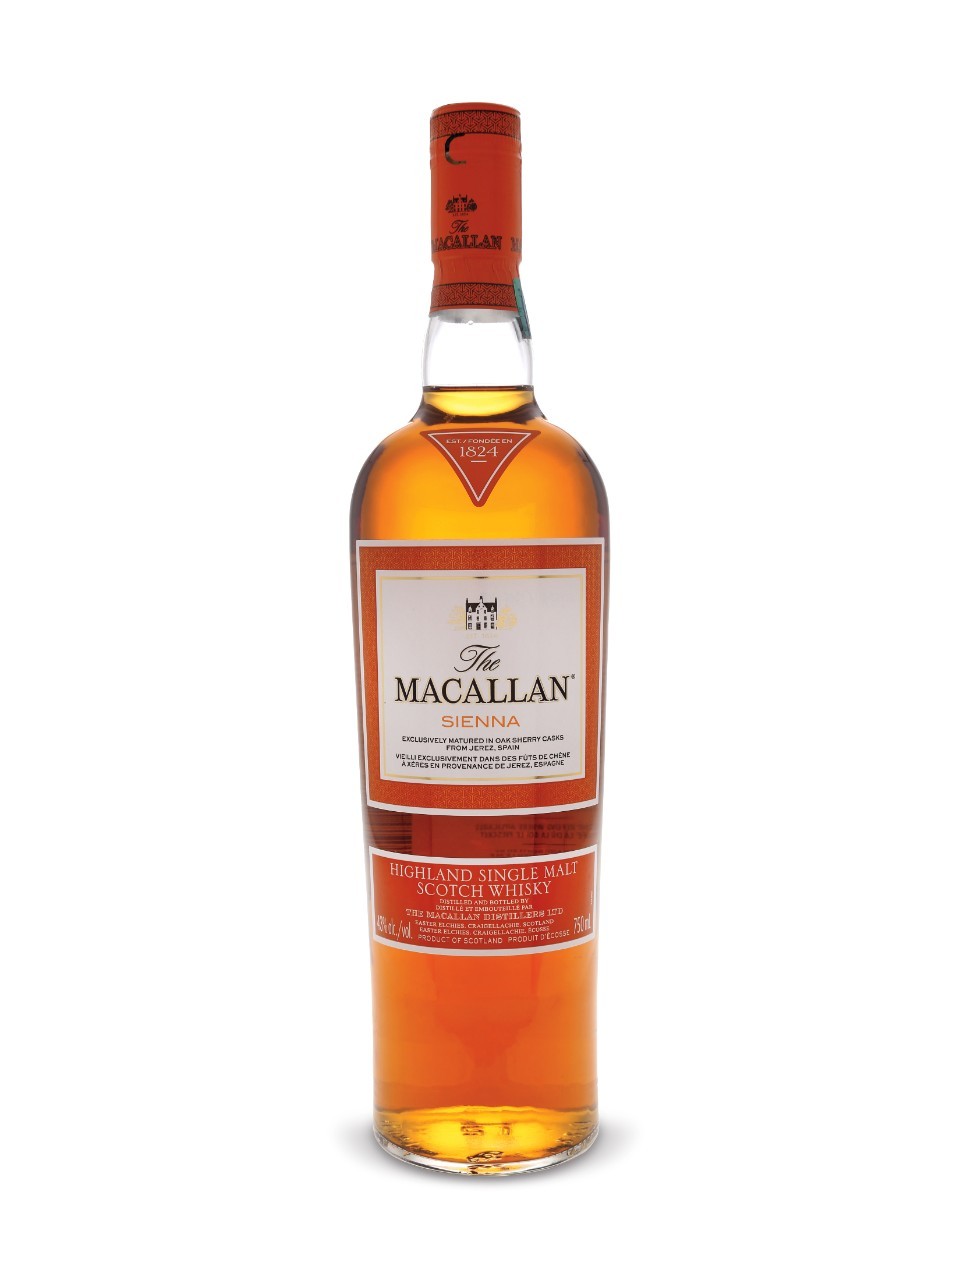 The Macallan Sienna Single Malt Scotch Whisky